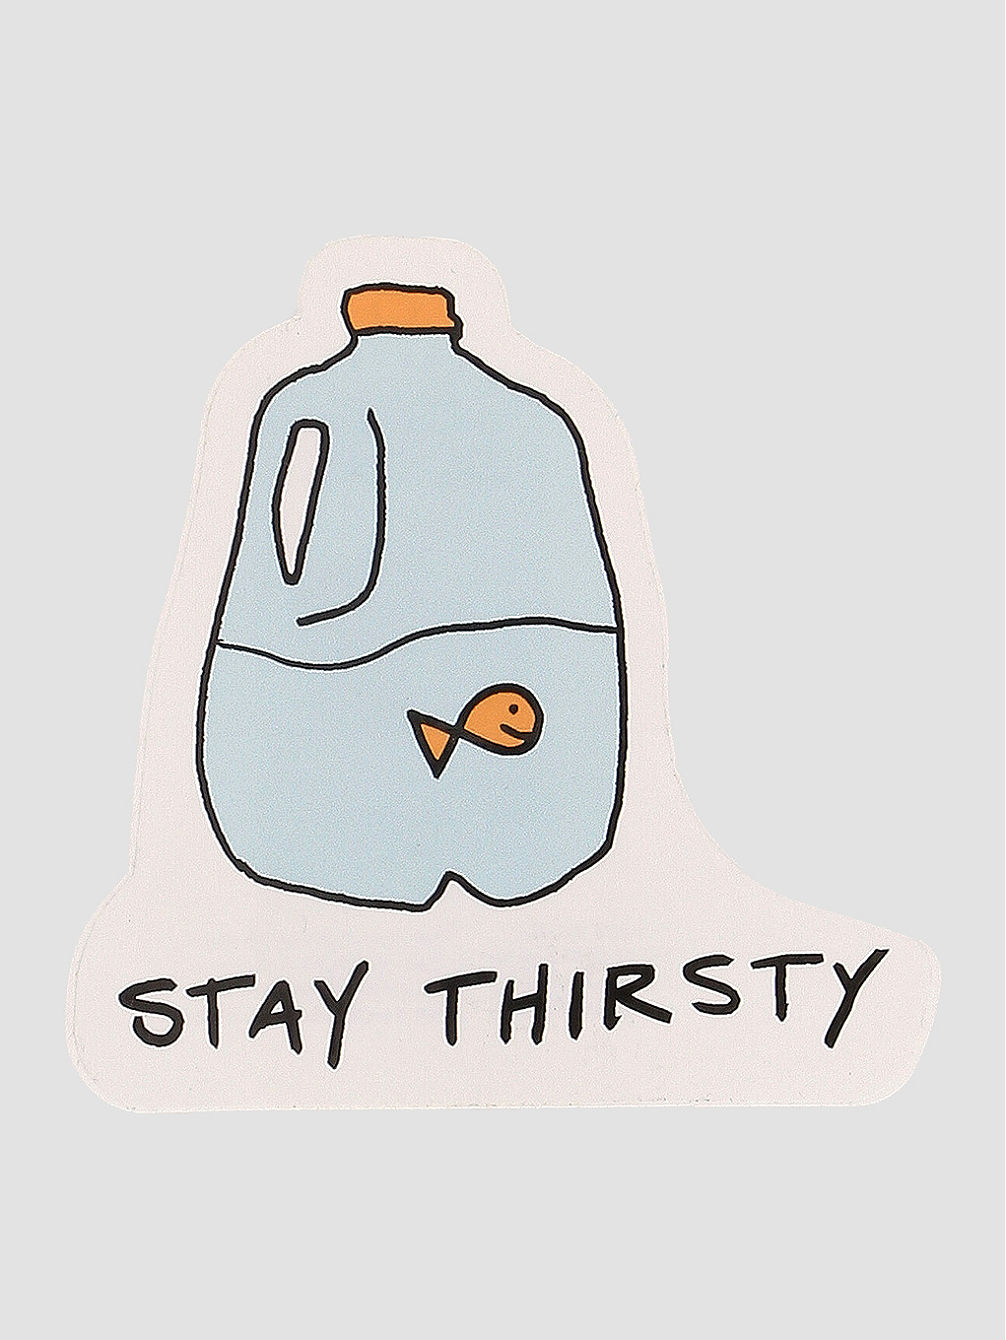 Stay Thirsty Sticker